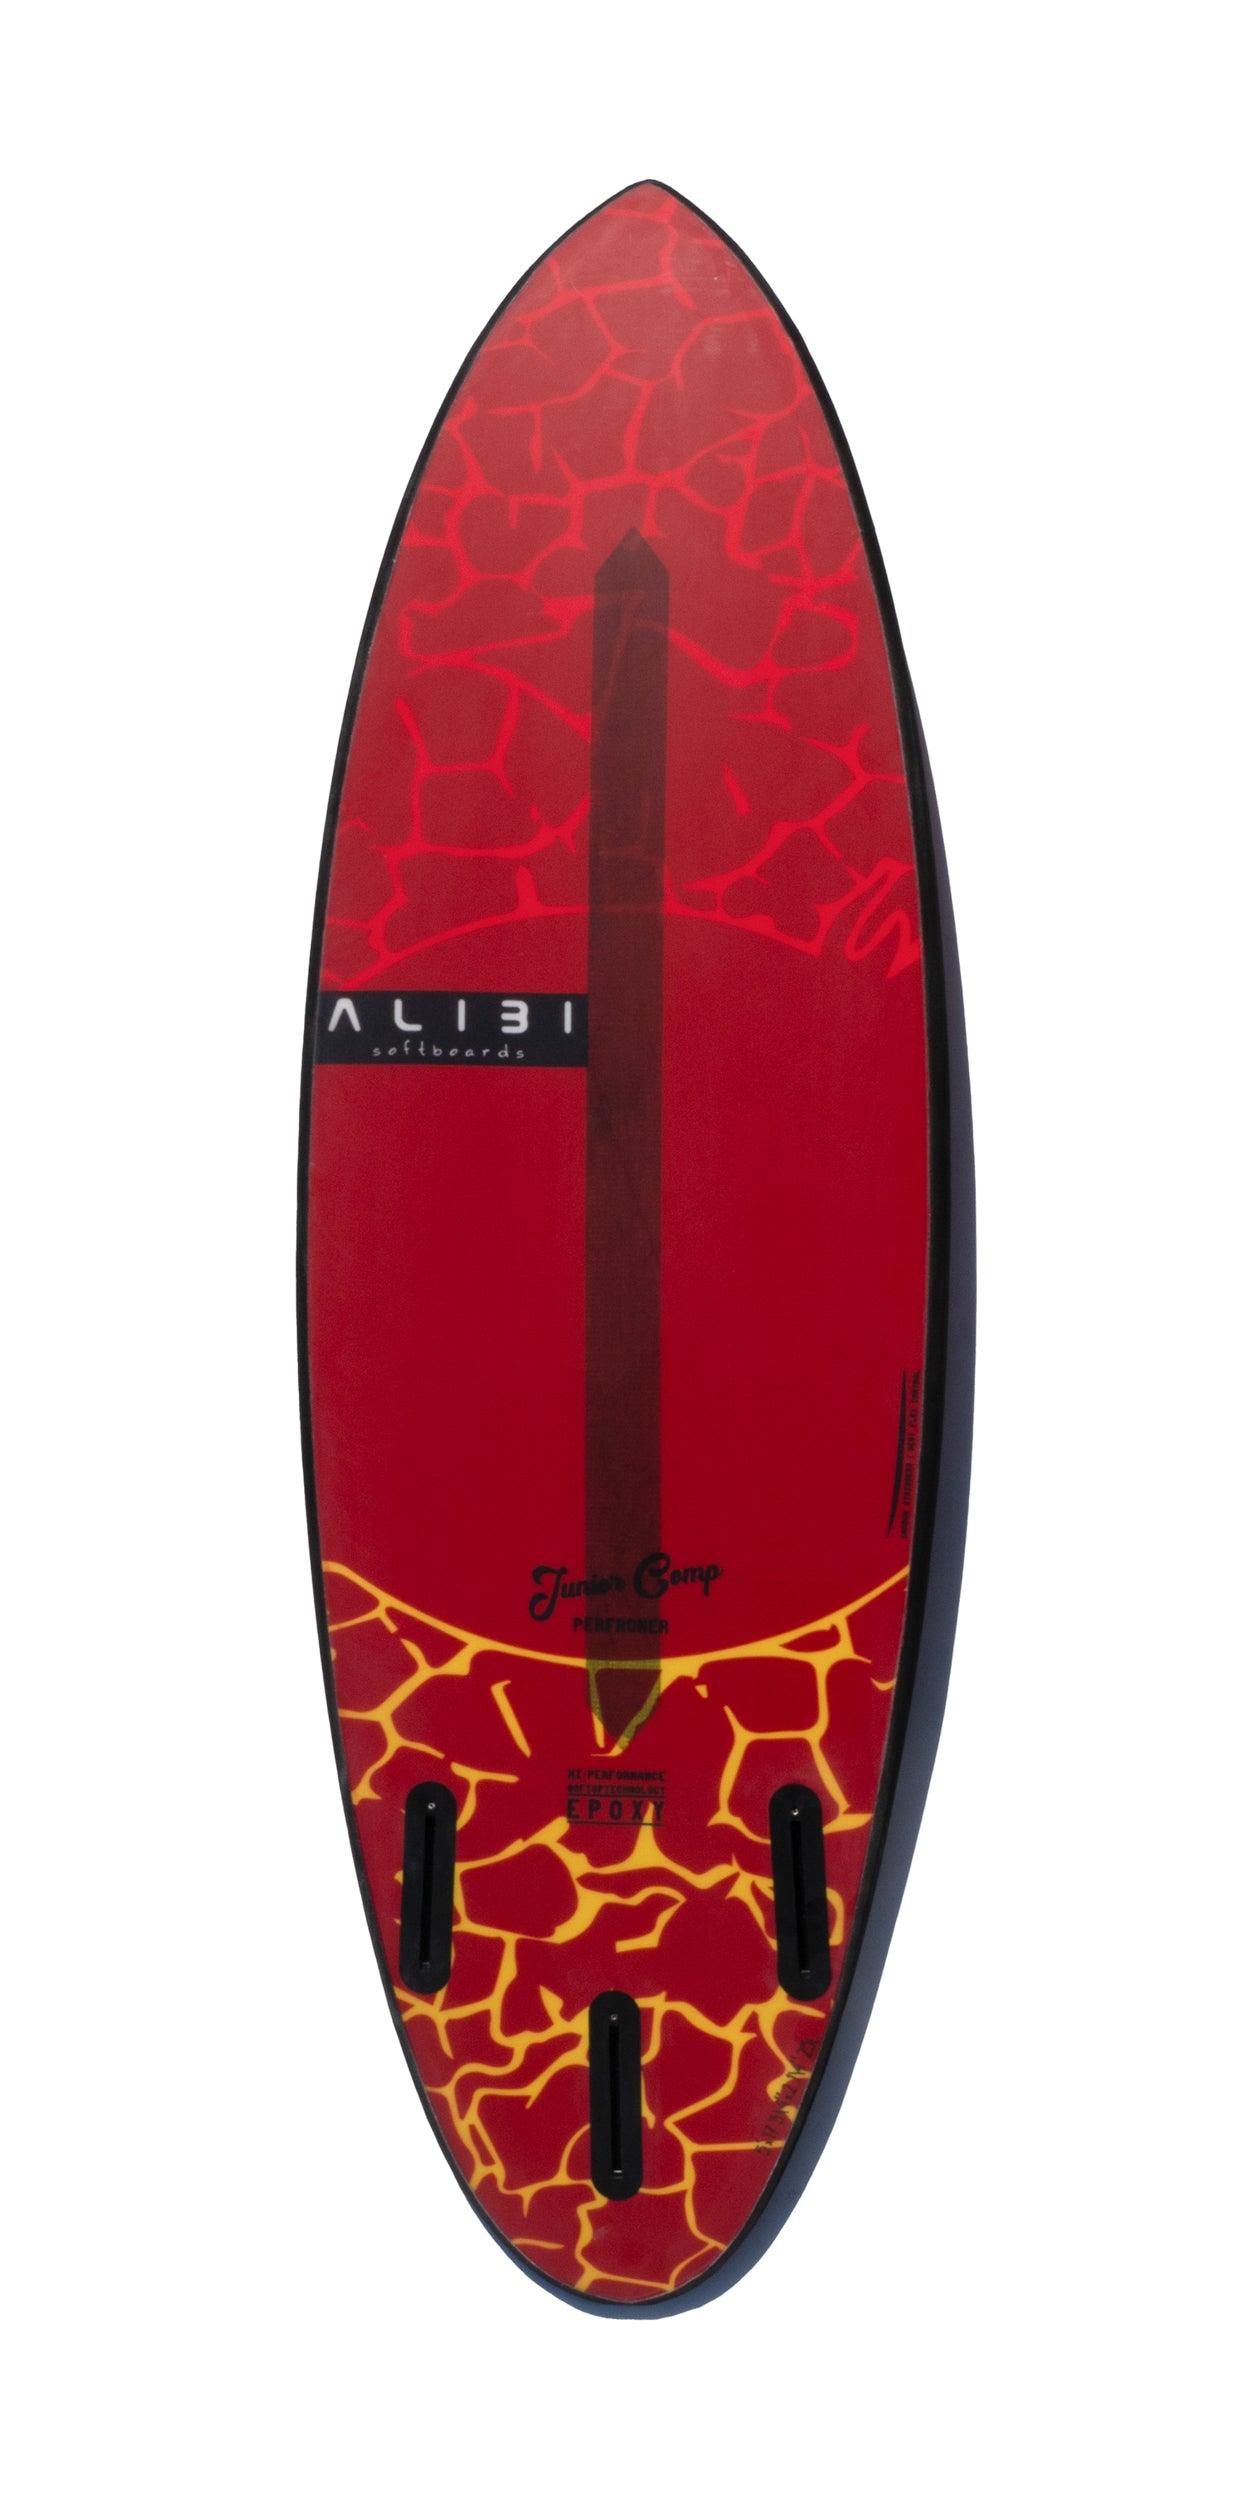 SURF HPR - Alibi Softboards